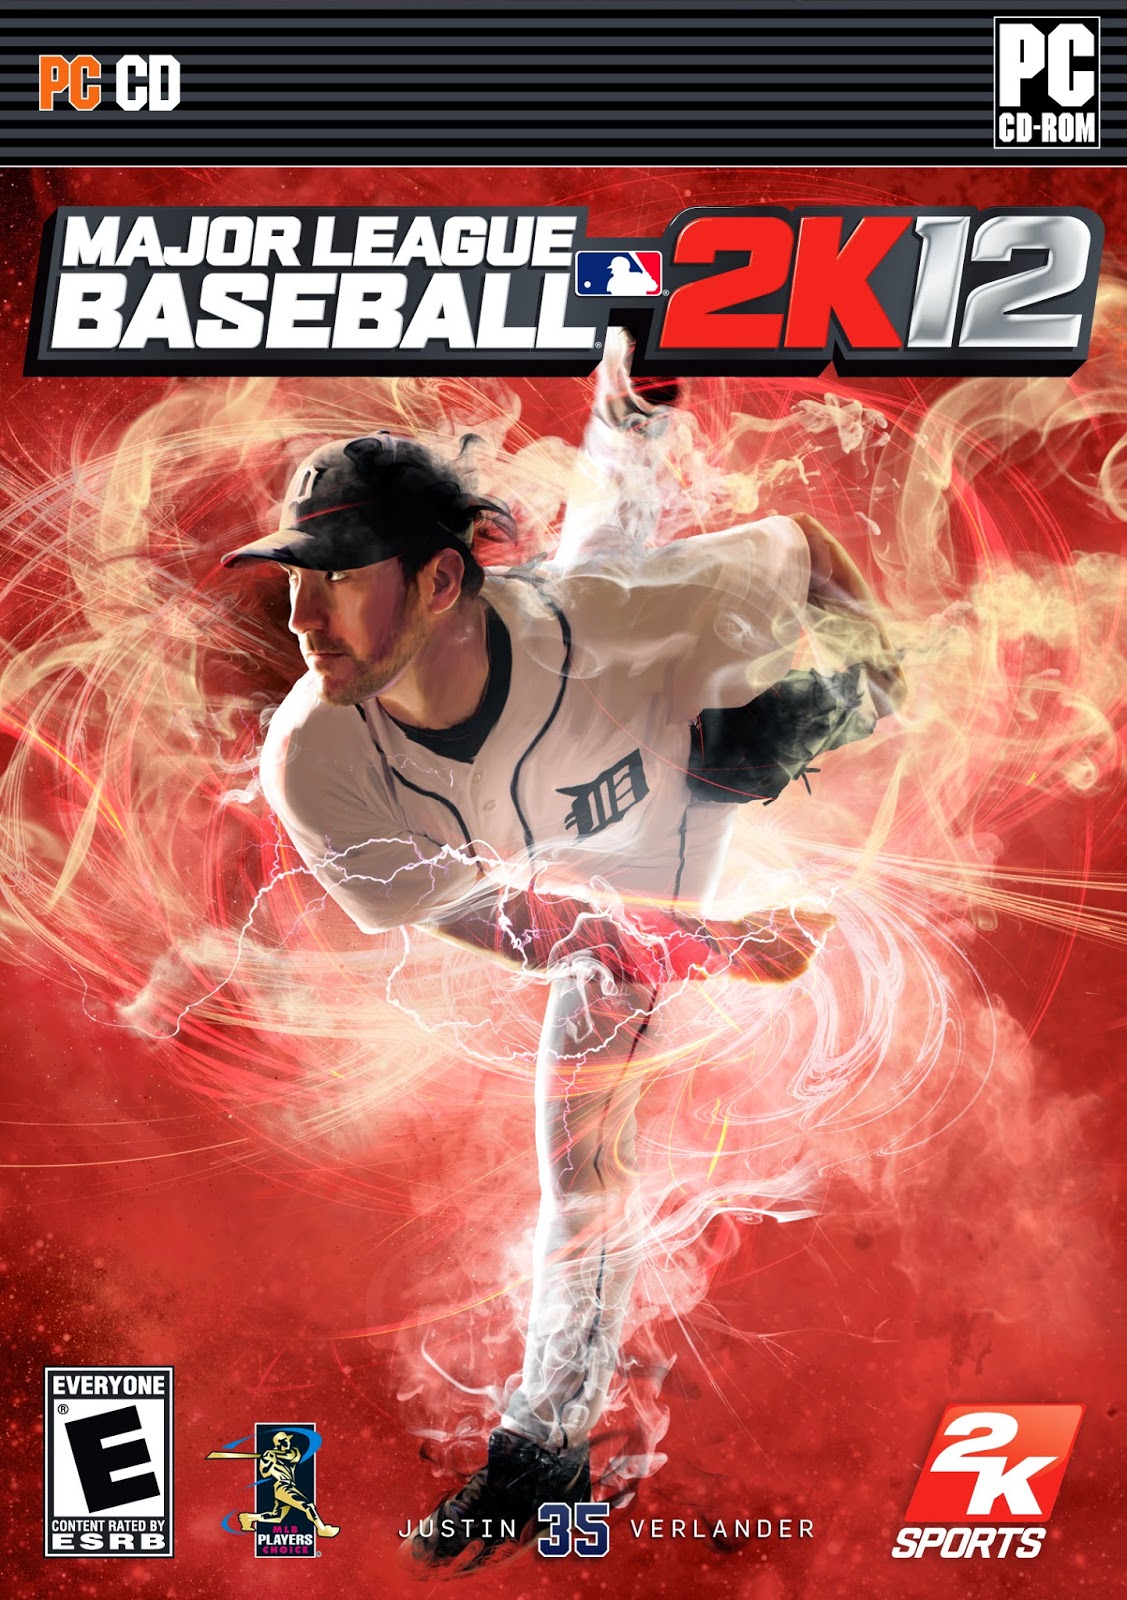 Major League Baseball 2K12 Game - PC Full Version Free Download